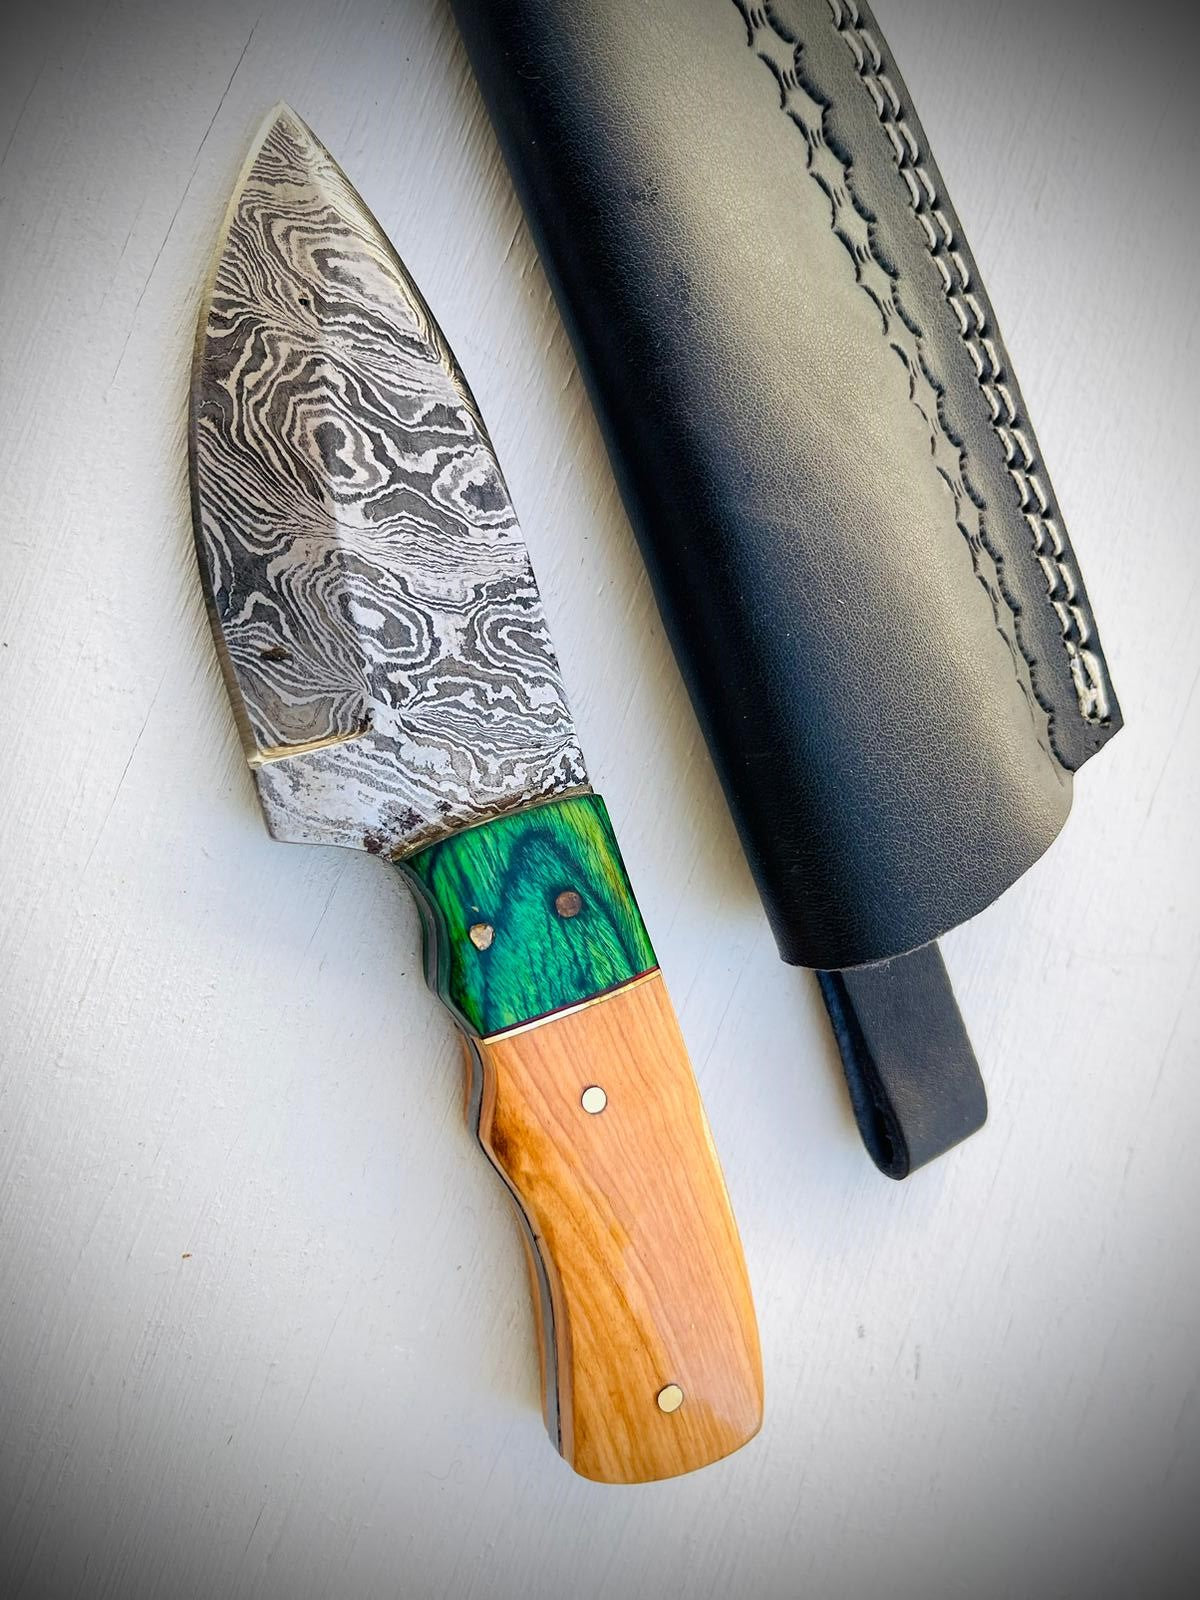 Damascus Steel Hunting Knife, Handmade Full Tang Skinner Knife, Fixed-Blade- Knife & Hunting Knife, Camping Knives & Hunting Knives, Olive Wood & Rose  Wood Handle with Leather Knife Sheath